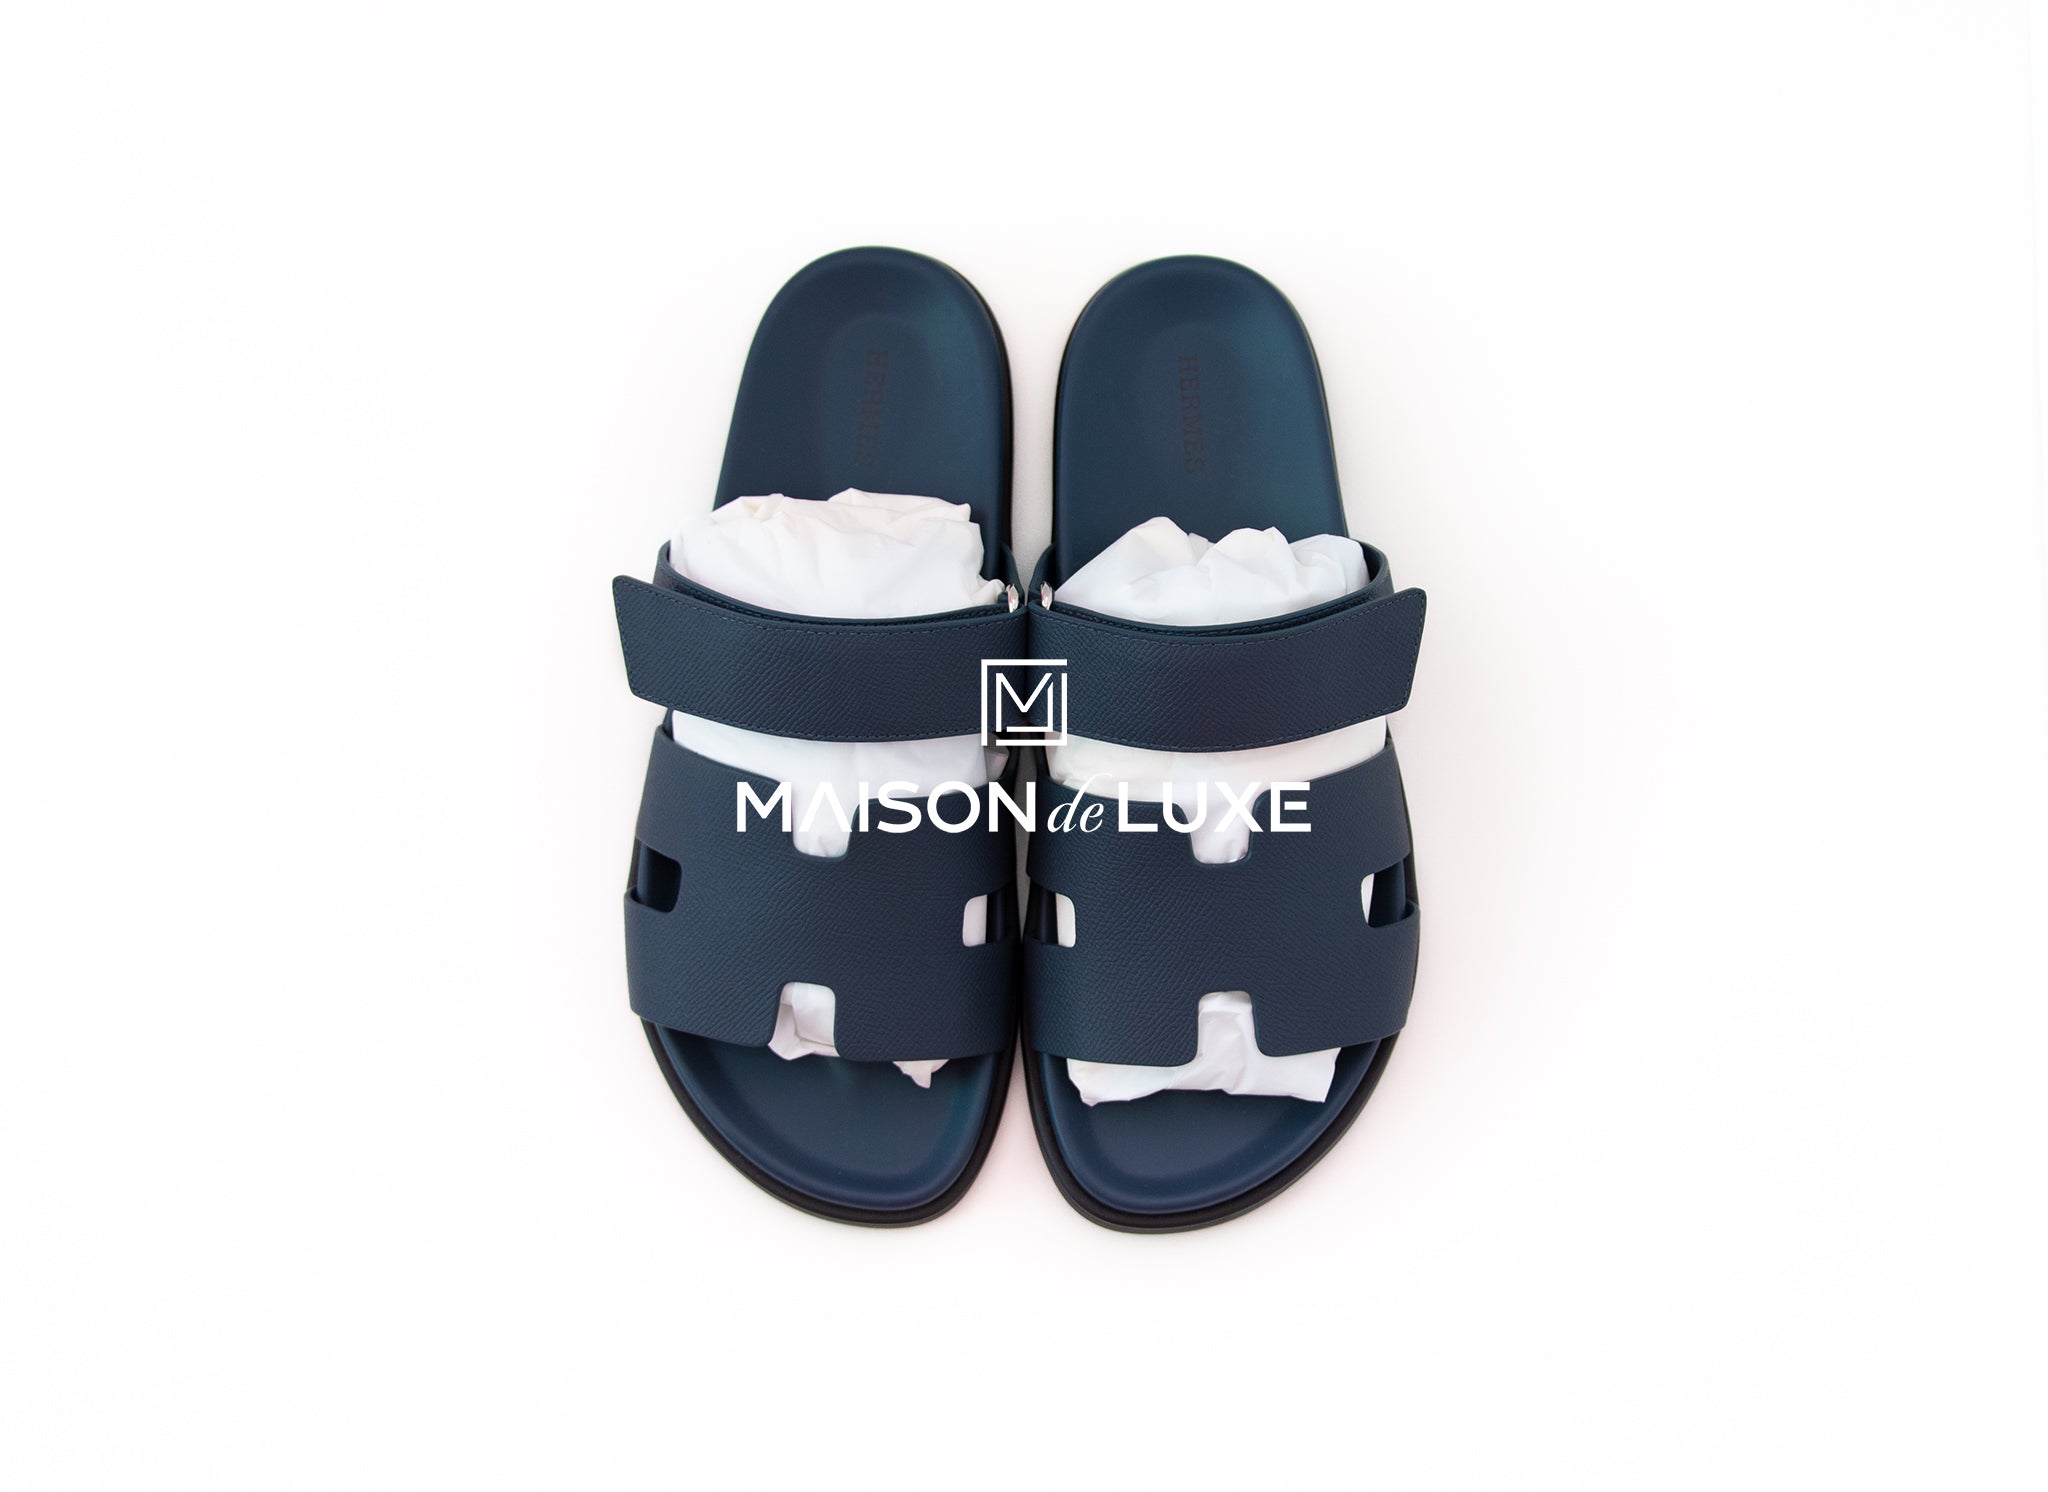 We offer Hermès Chypre Sandals (Bleu Celeste) Hermès to our loyal